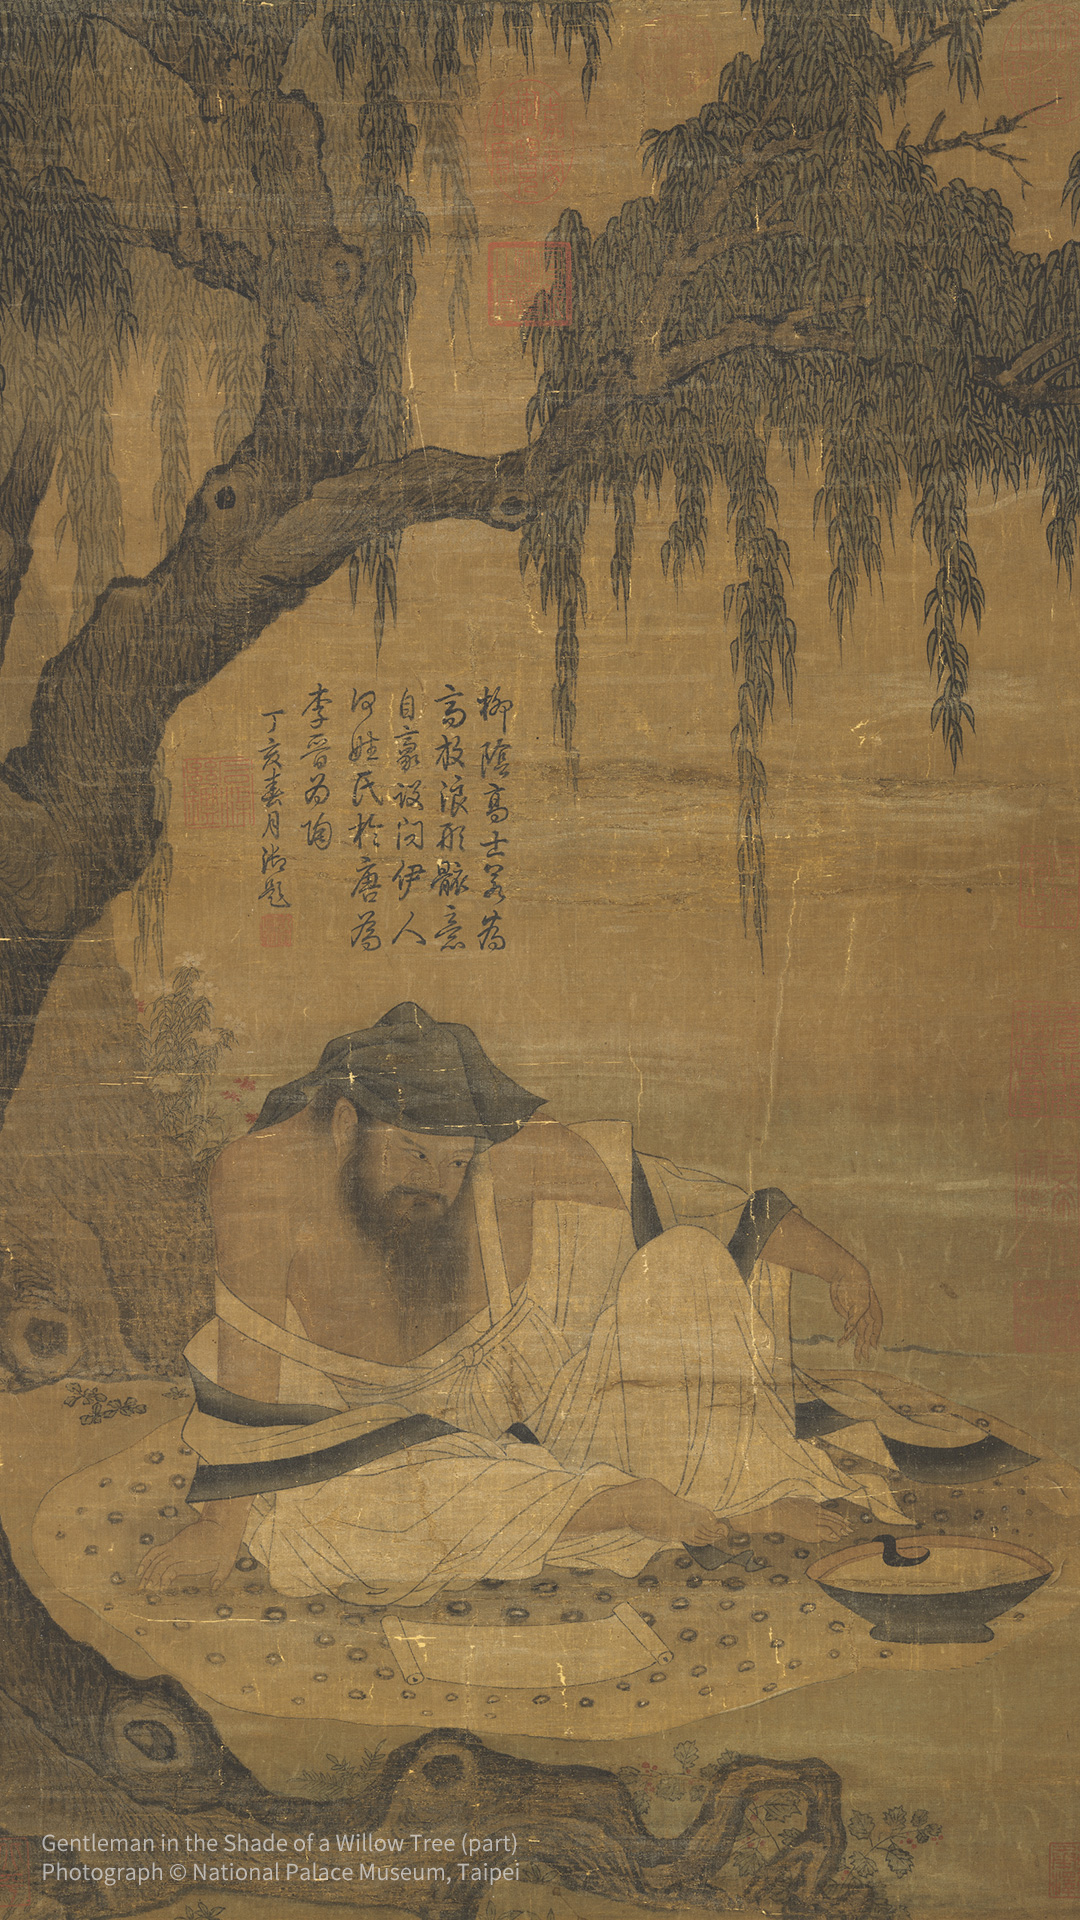 Chinese literati a thousand years ago